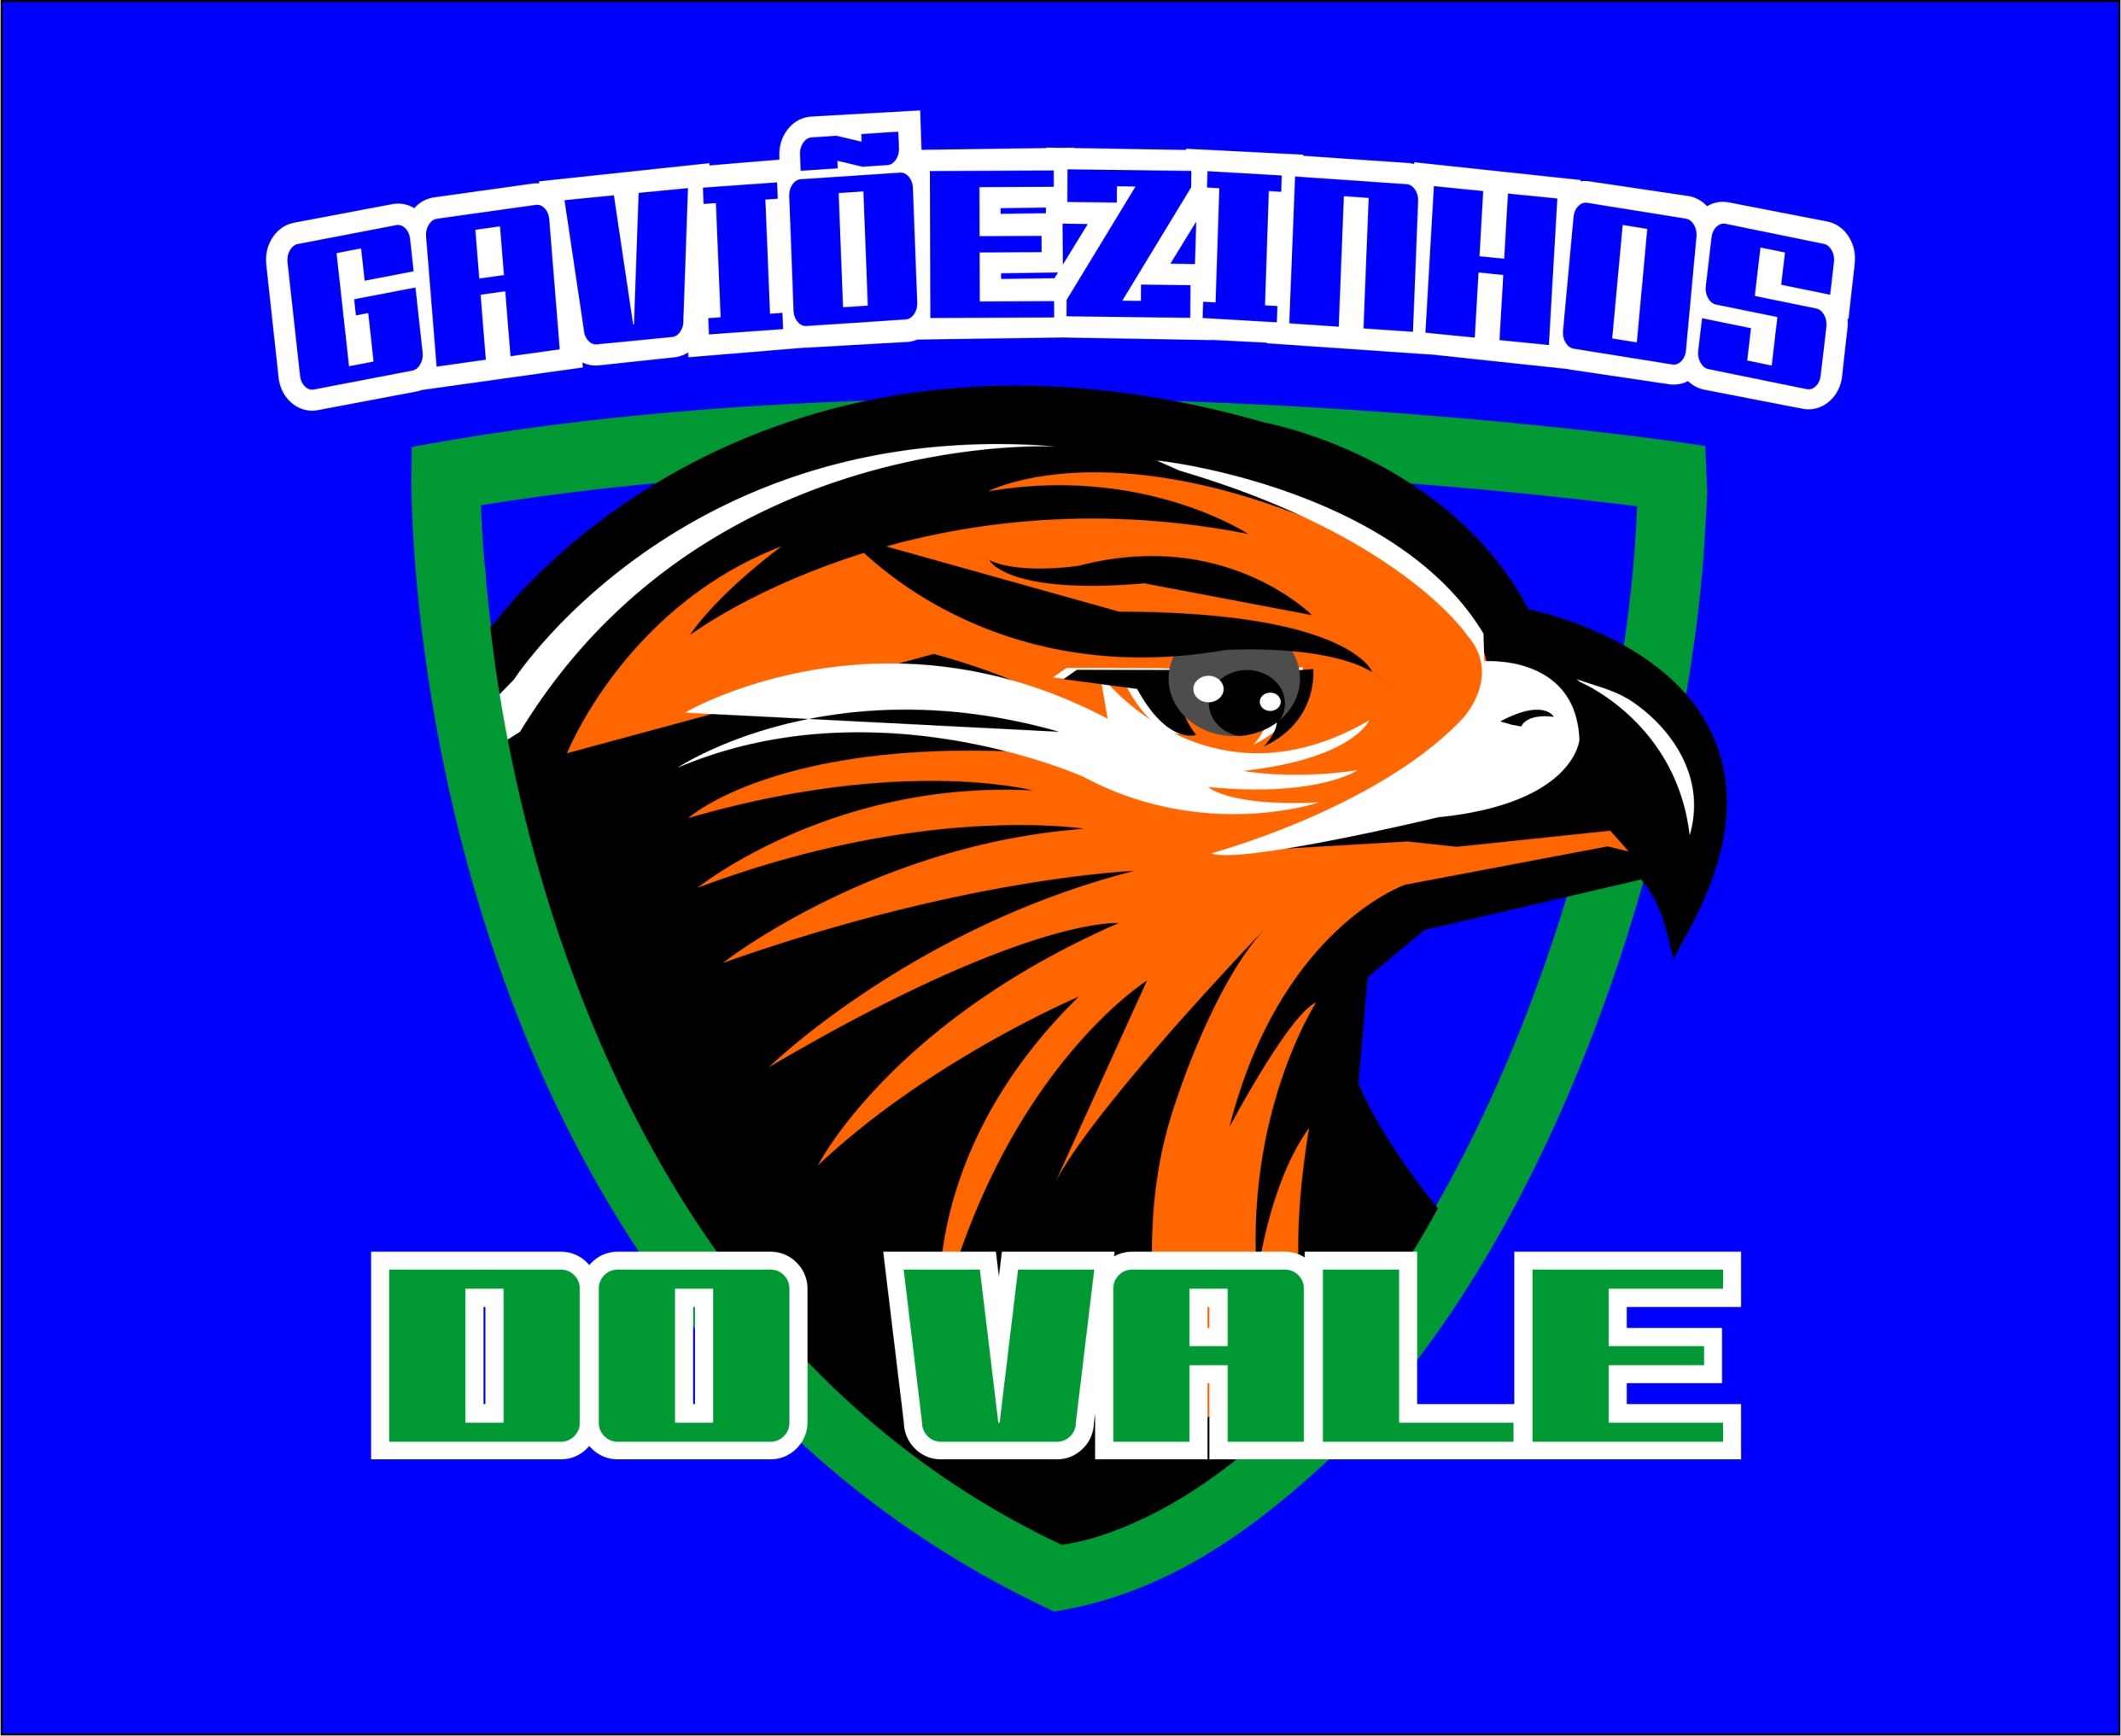 GAVIEZINHOS DO VALE